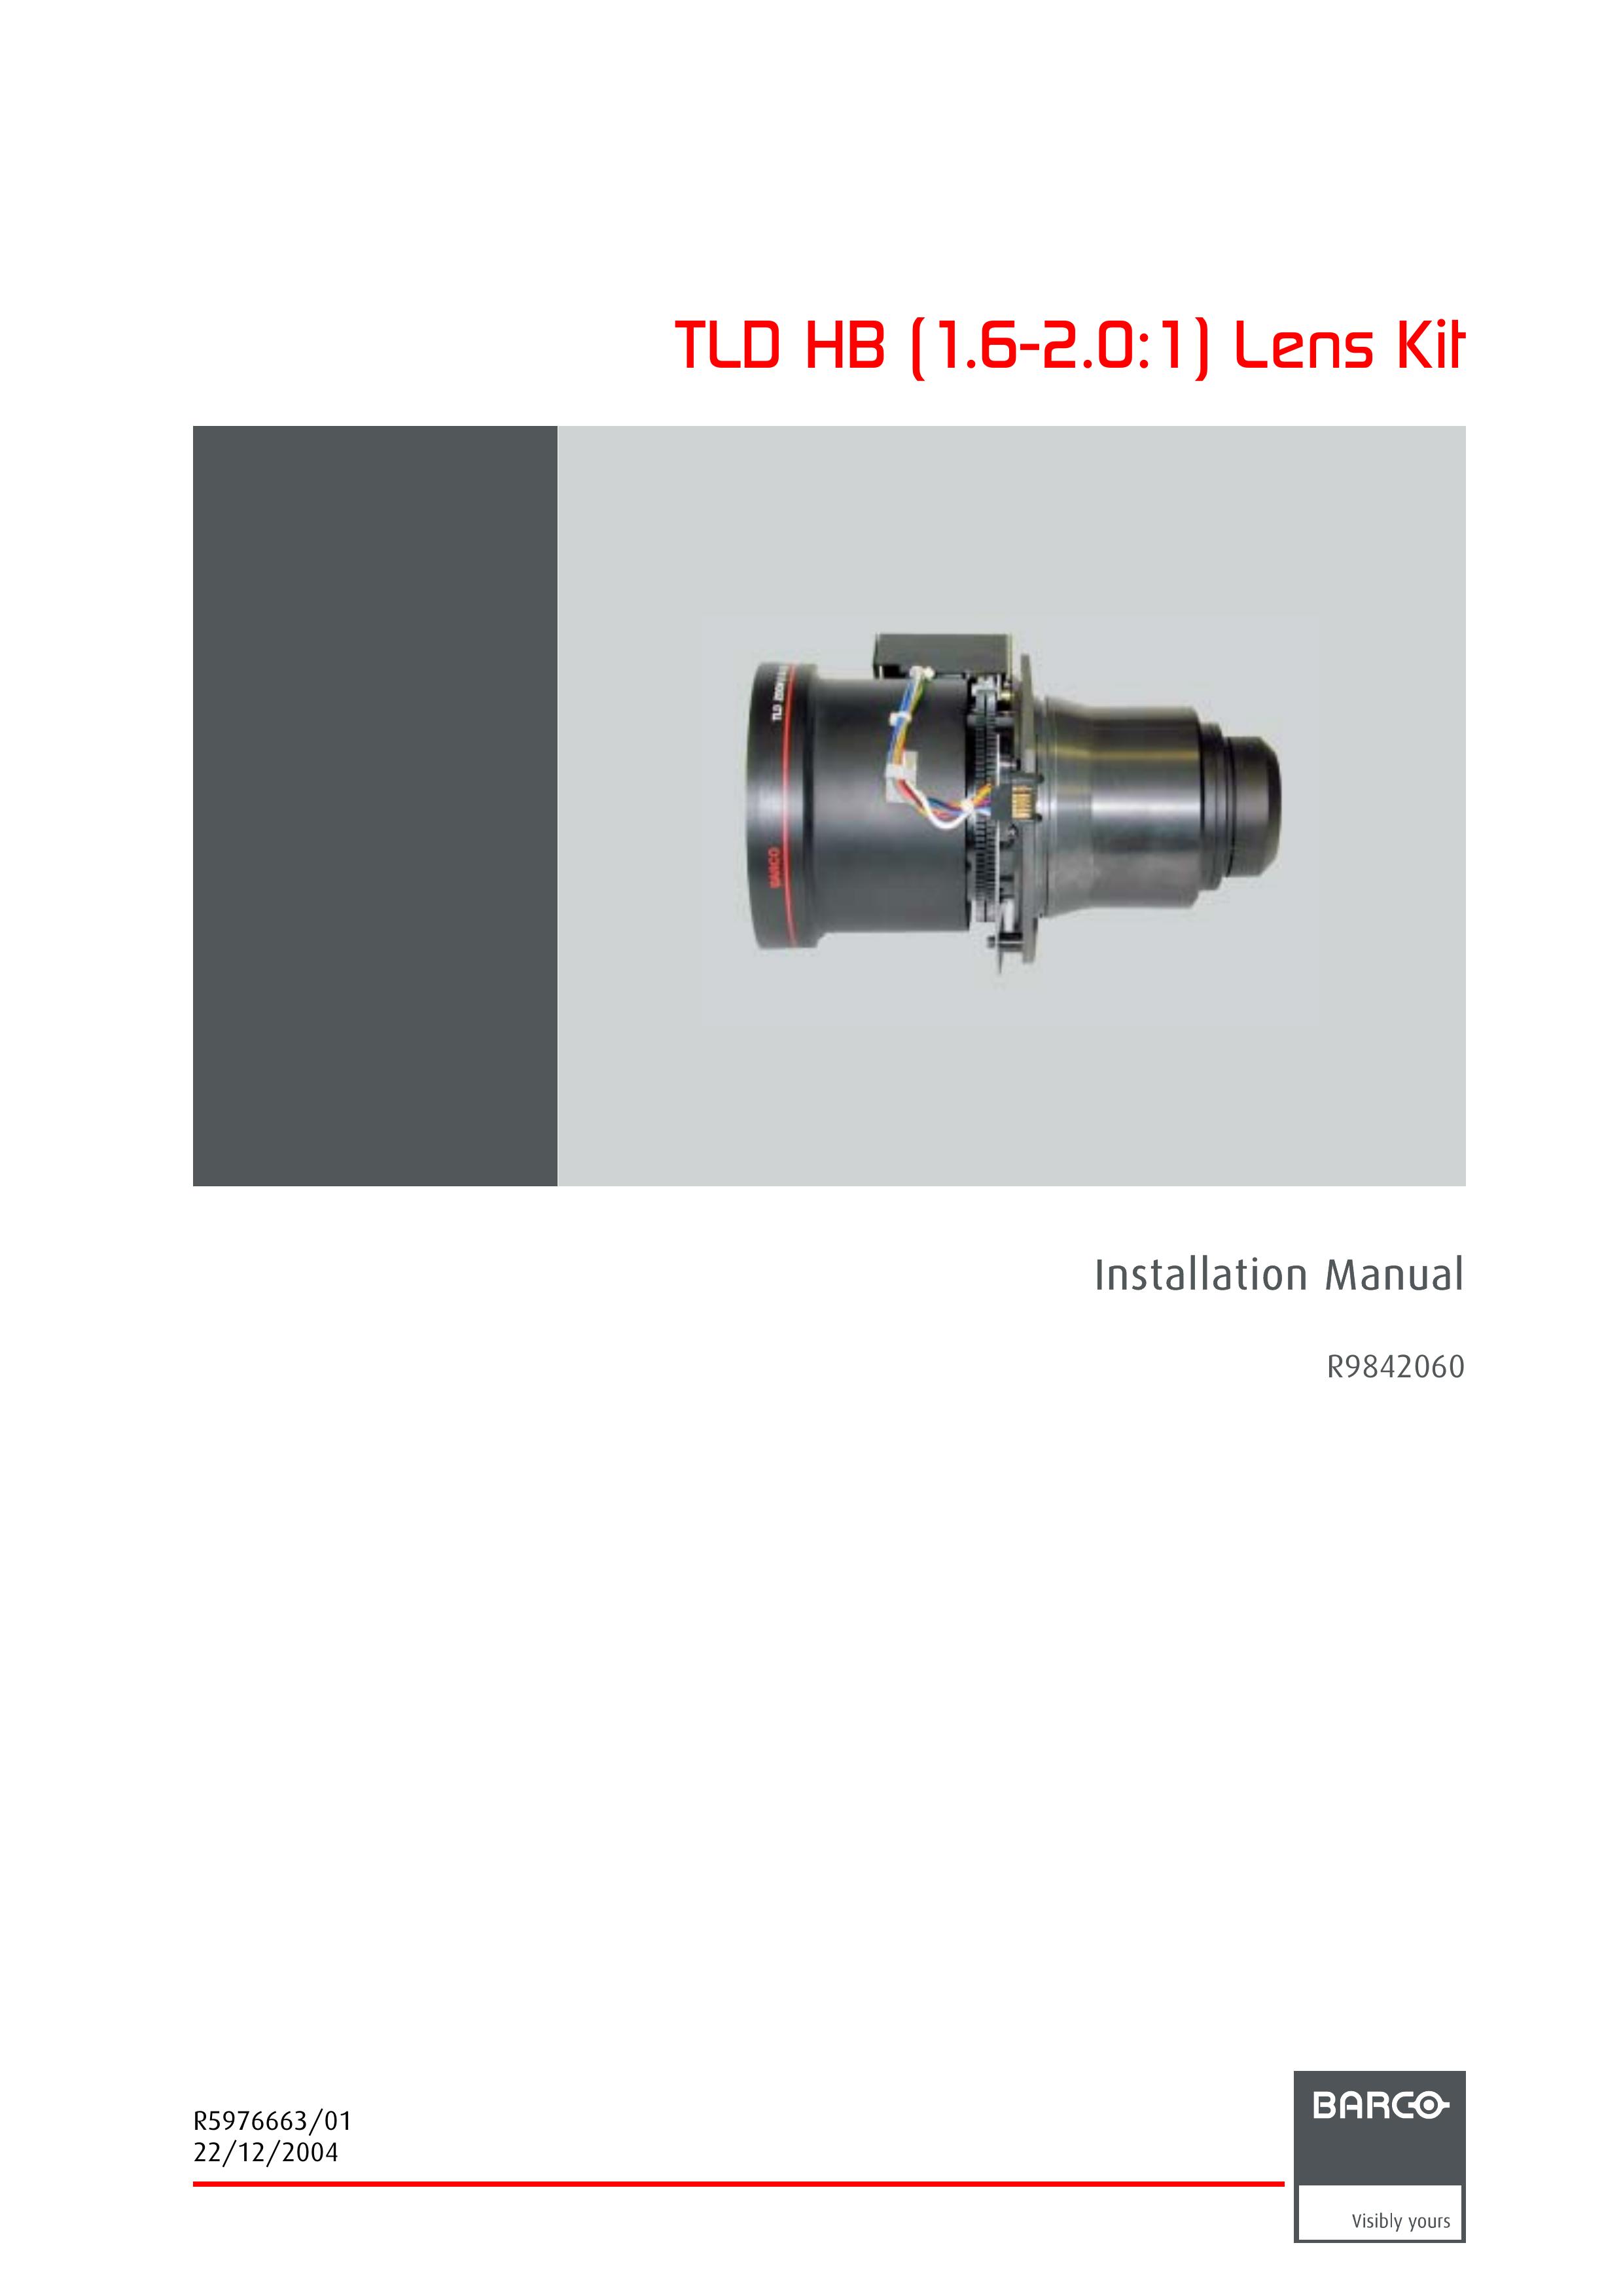 Barco R5976663/01 Camera Accessories User Manual